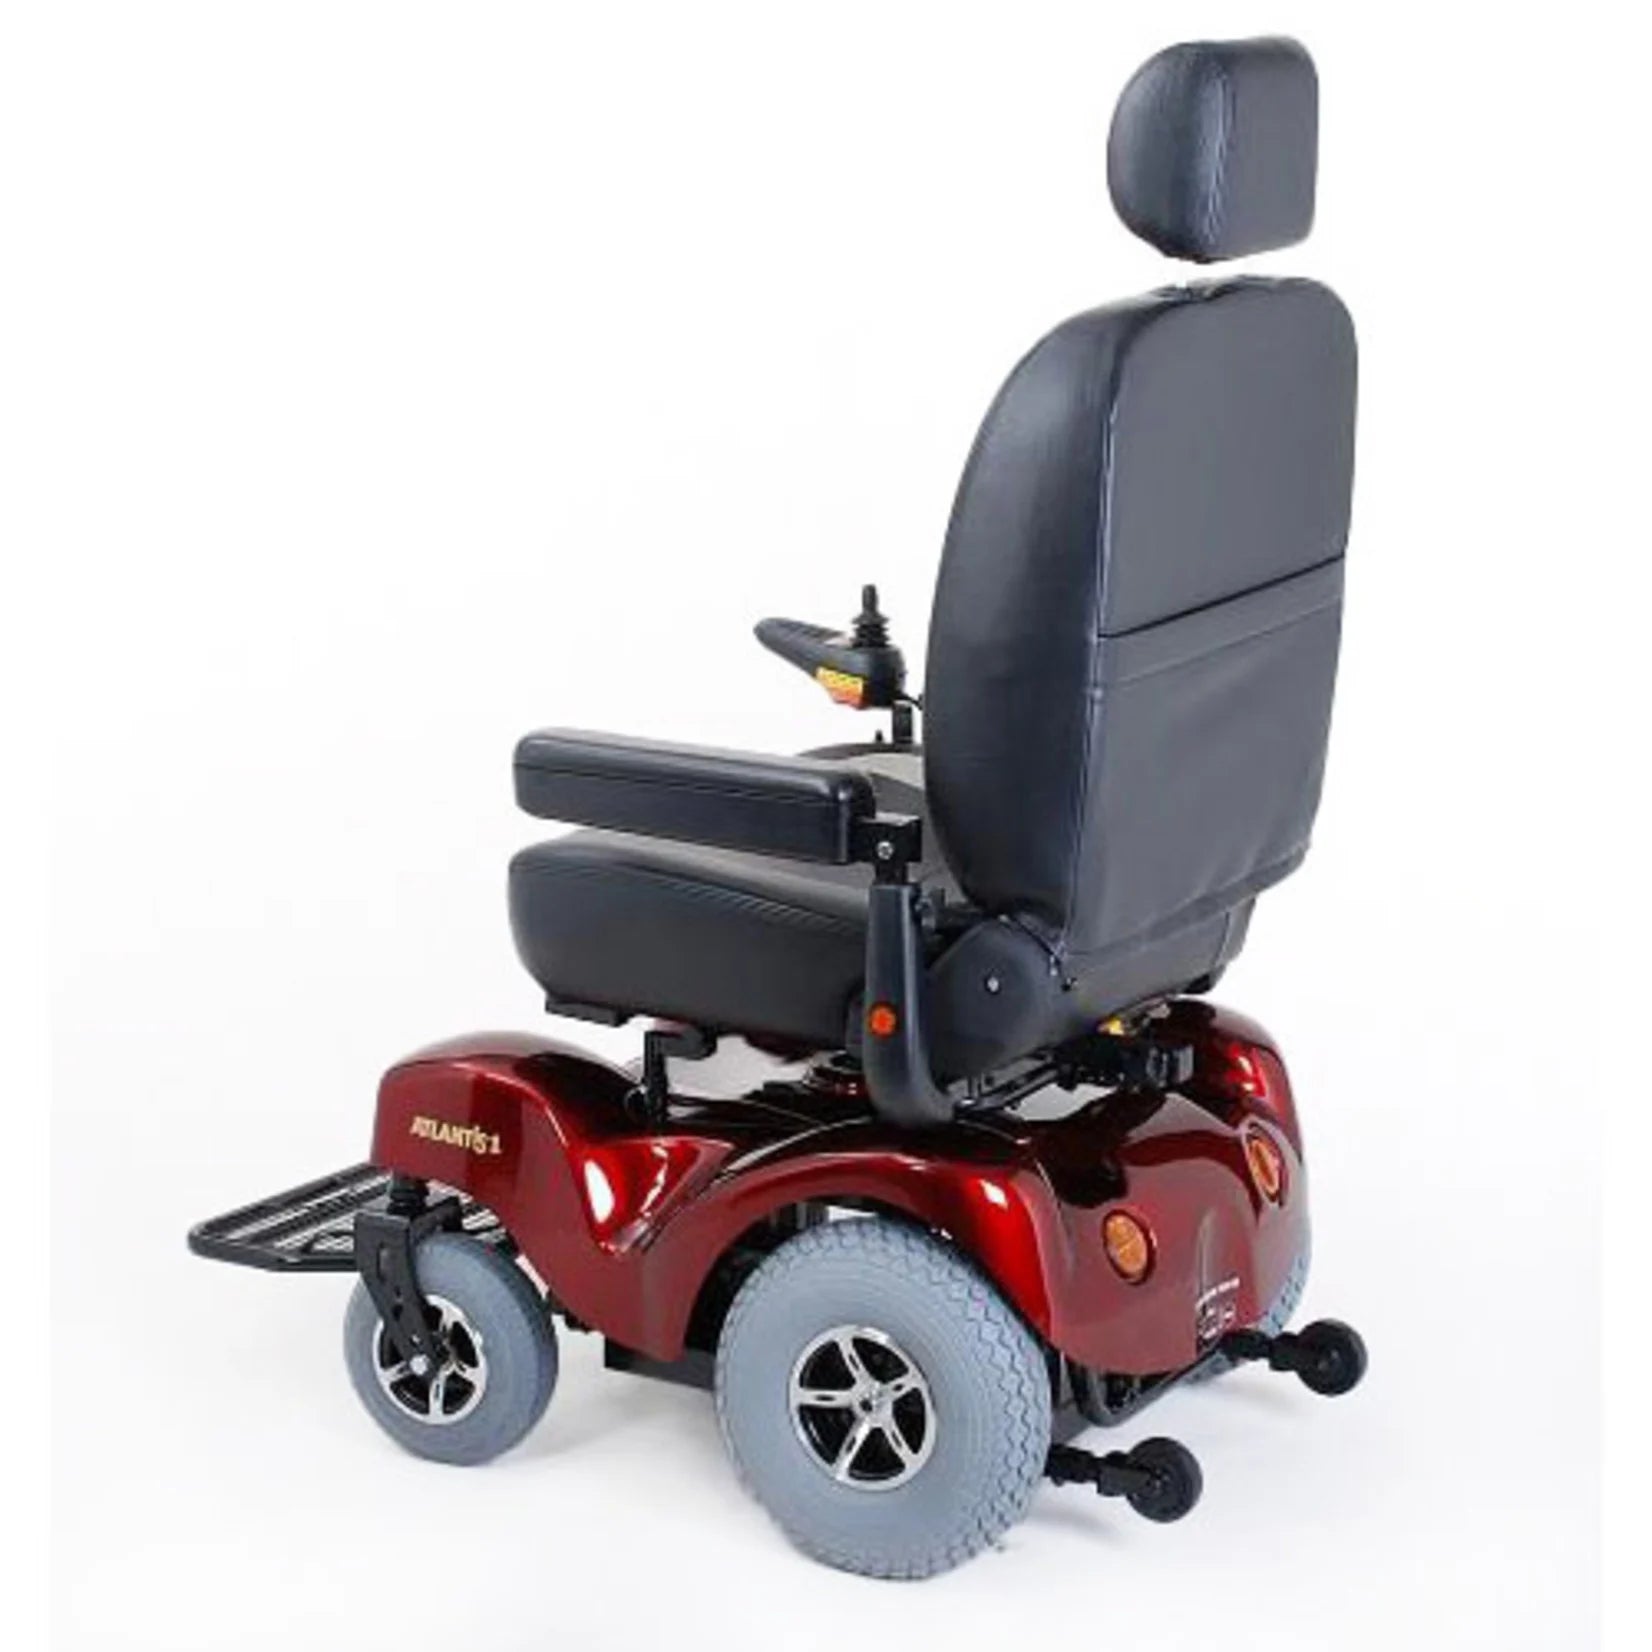 MERITS HEALTH ATLANTIS POWER WHEELCHAIR Power wheelchairs Merits Health   